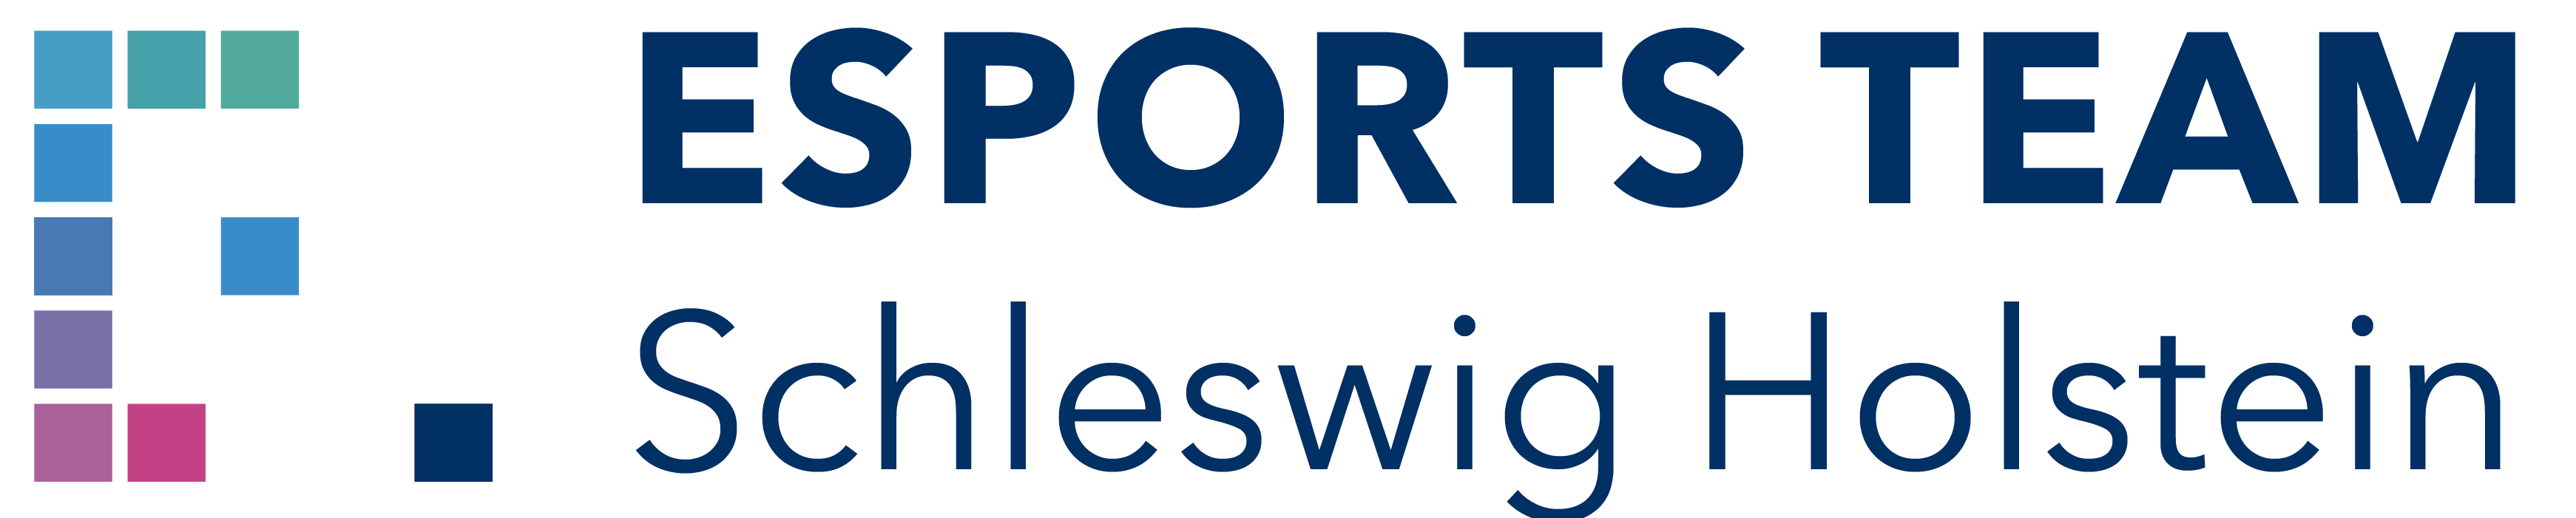 esports team sh logo